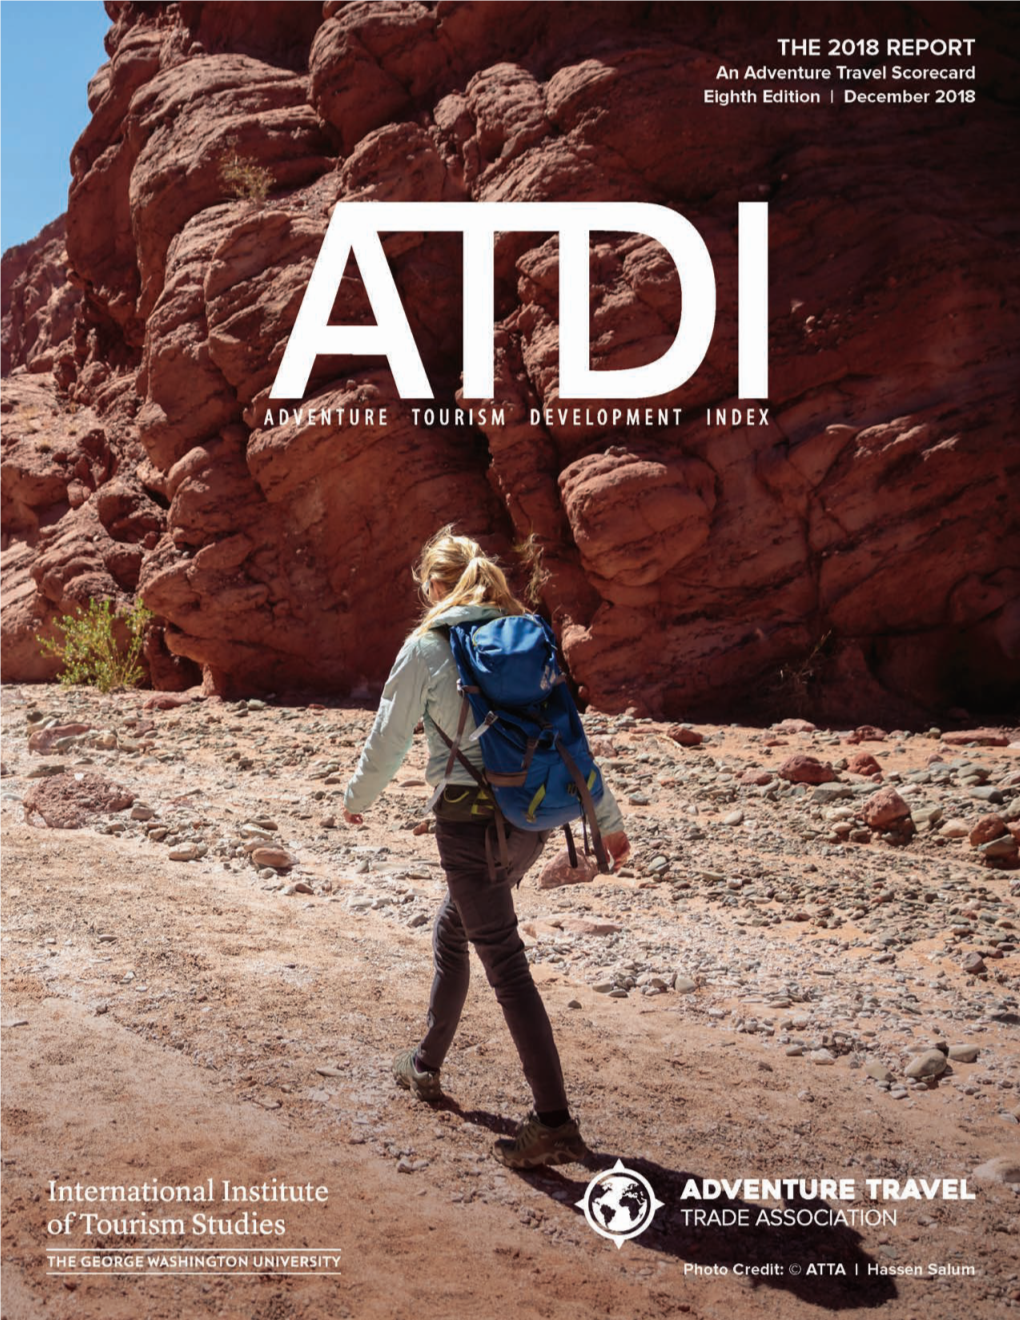 ATDI 2018 REPORT Photo Credit: © ATTA / Border Free Travels INTRODUCTION